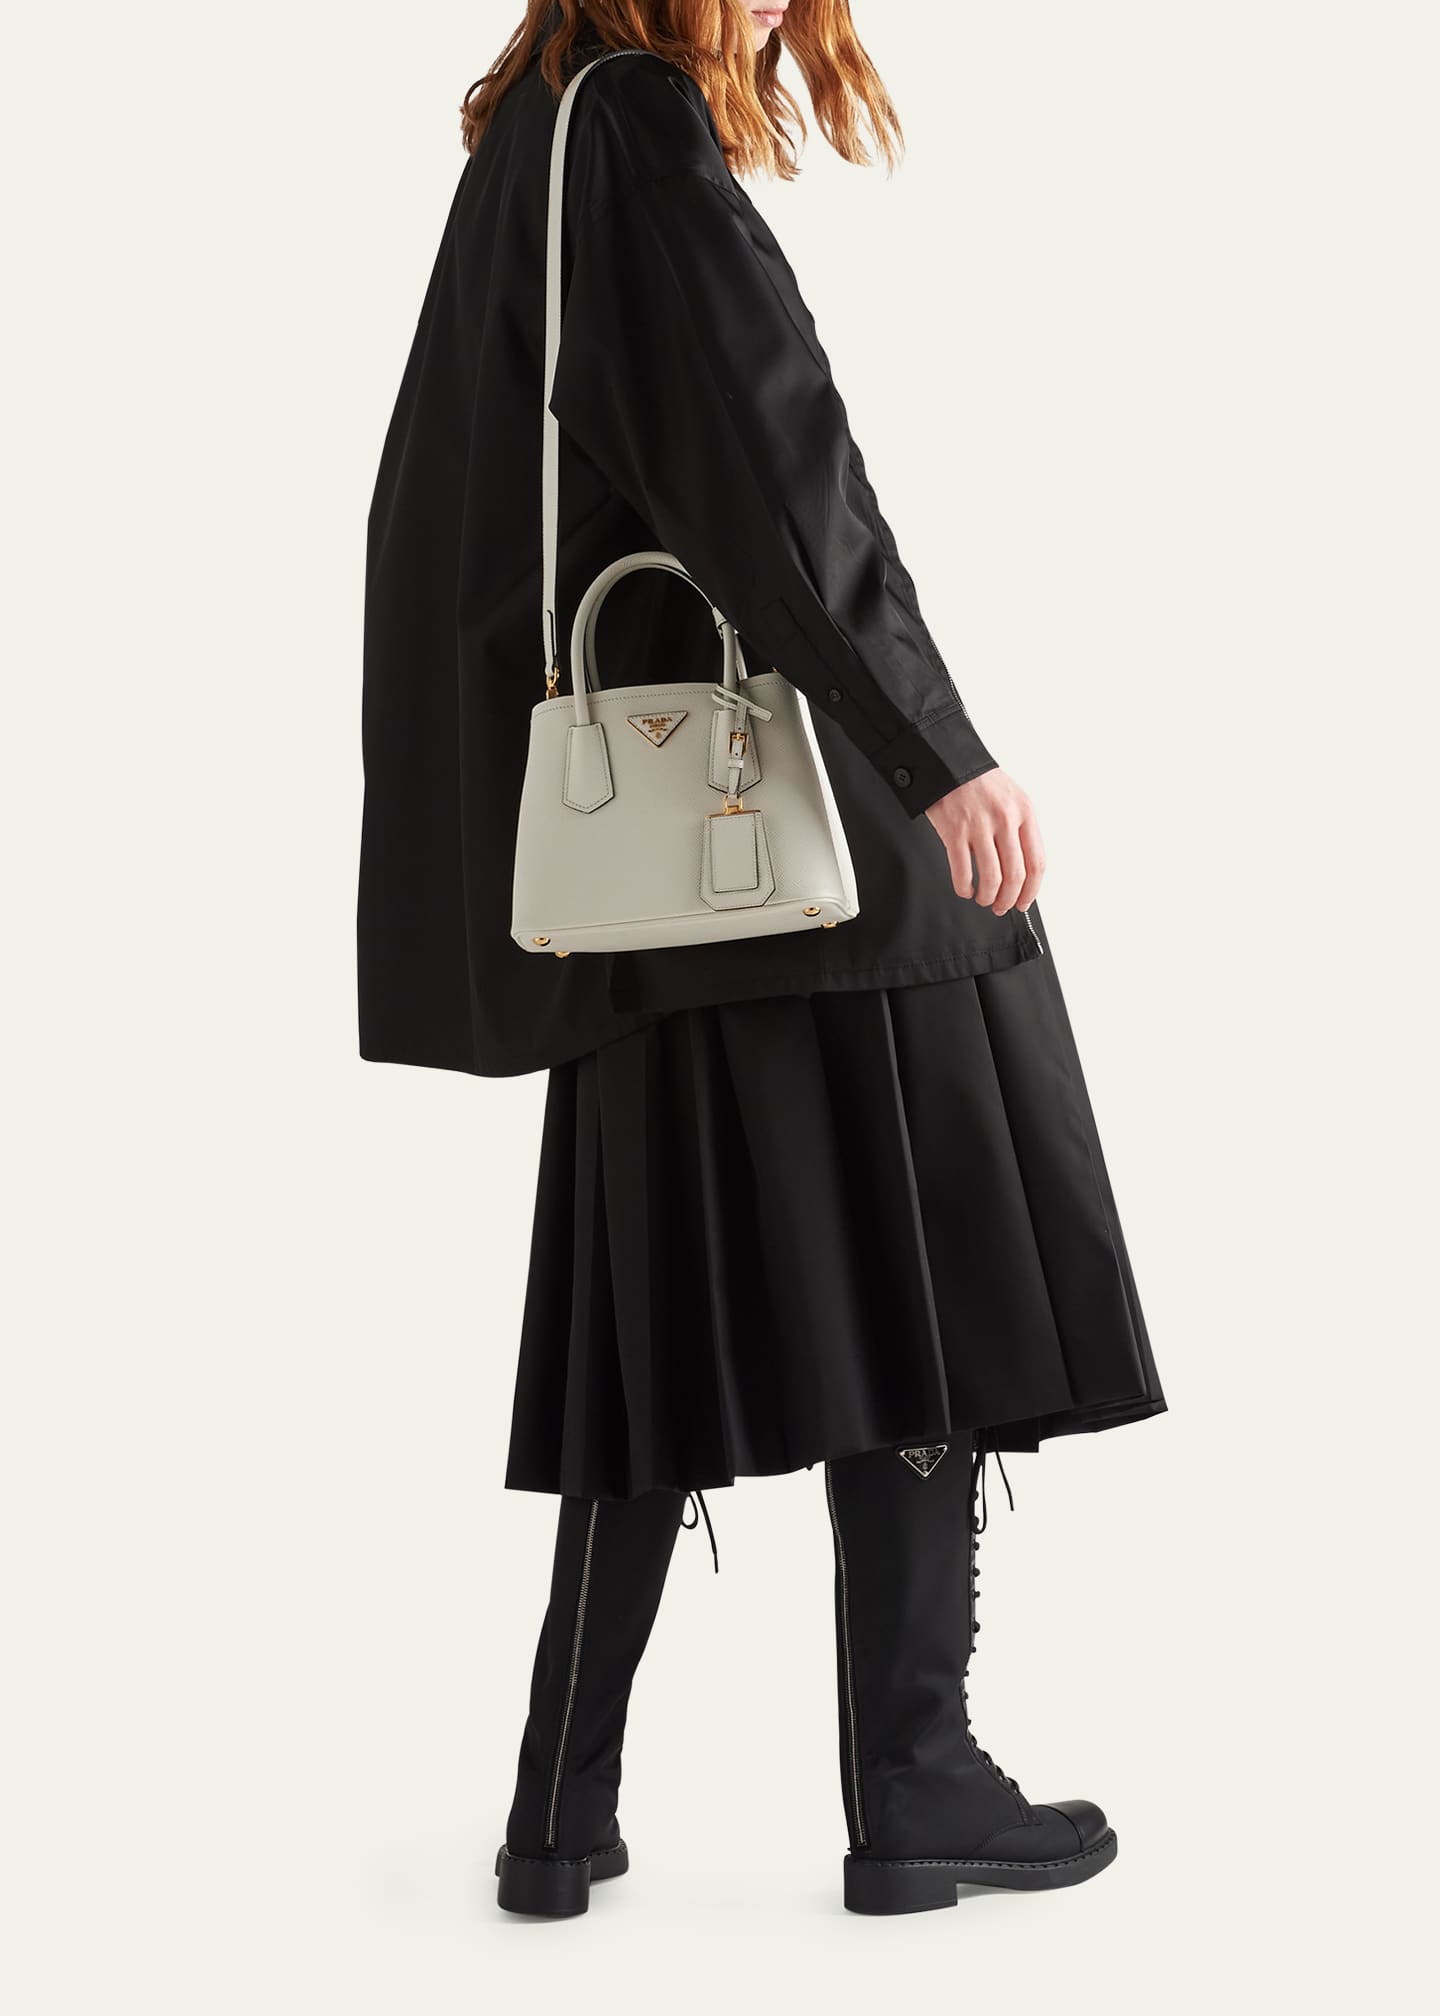 Prada Mini Saffiano Leather Shoulder Bag